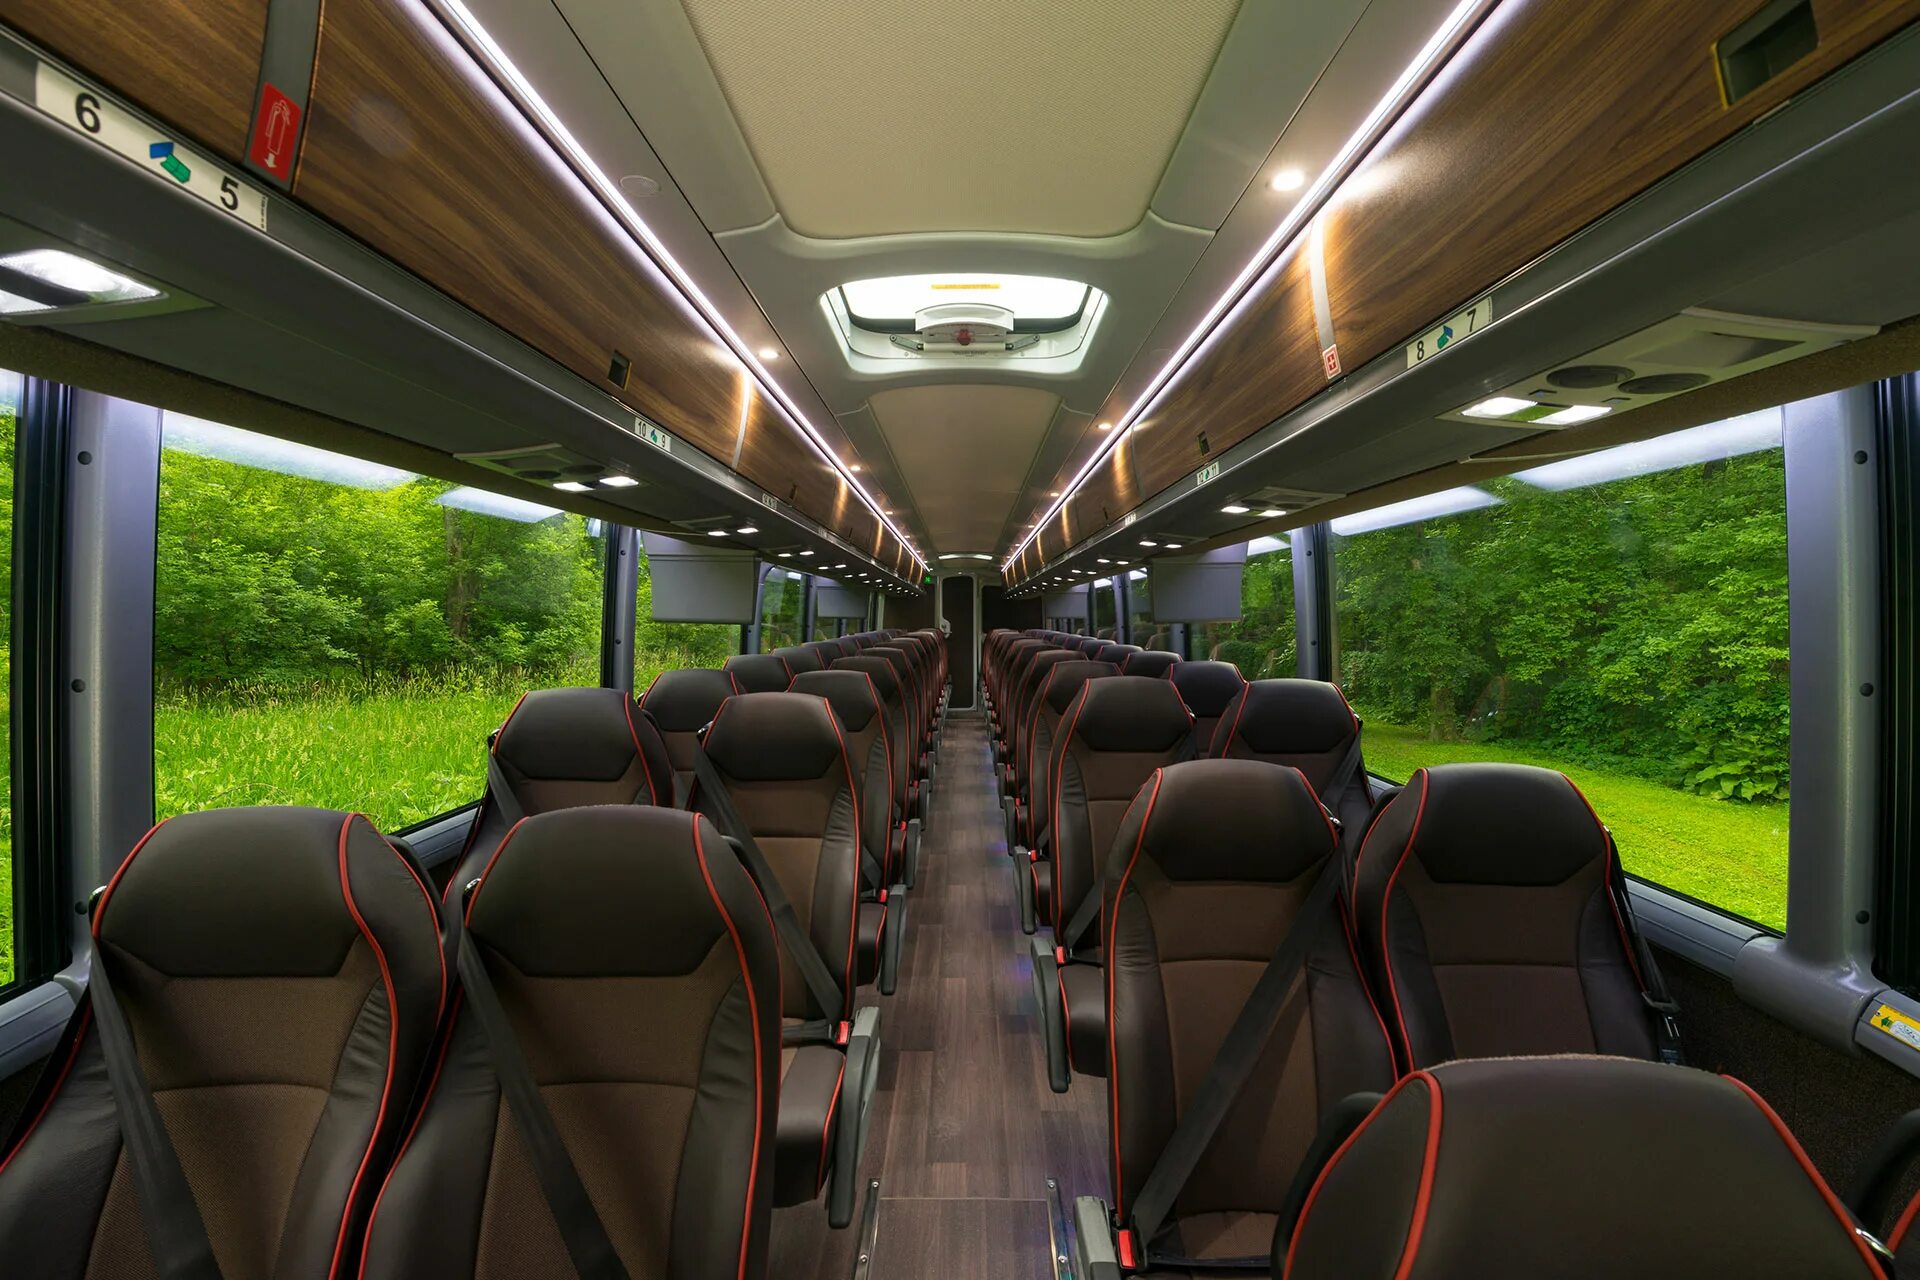 Bus seats. Flixbus внутри. Bus inside. Coach Bus inside. Autobus inside.